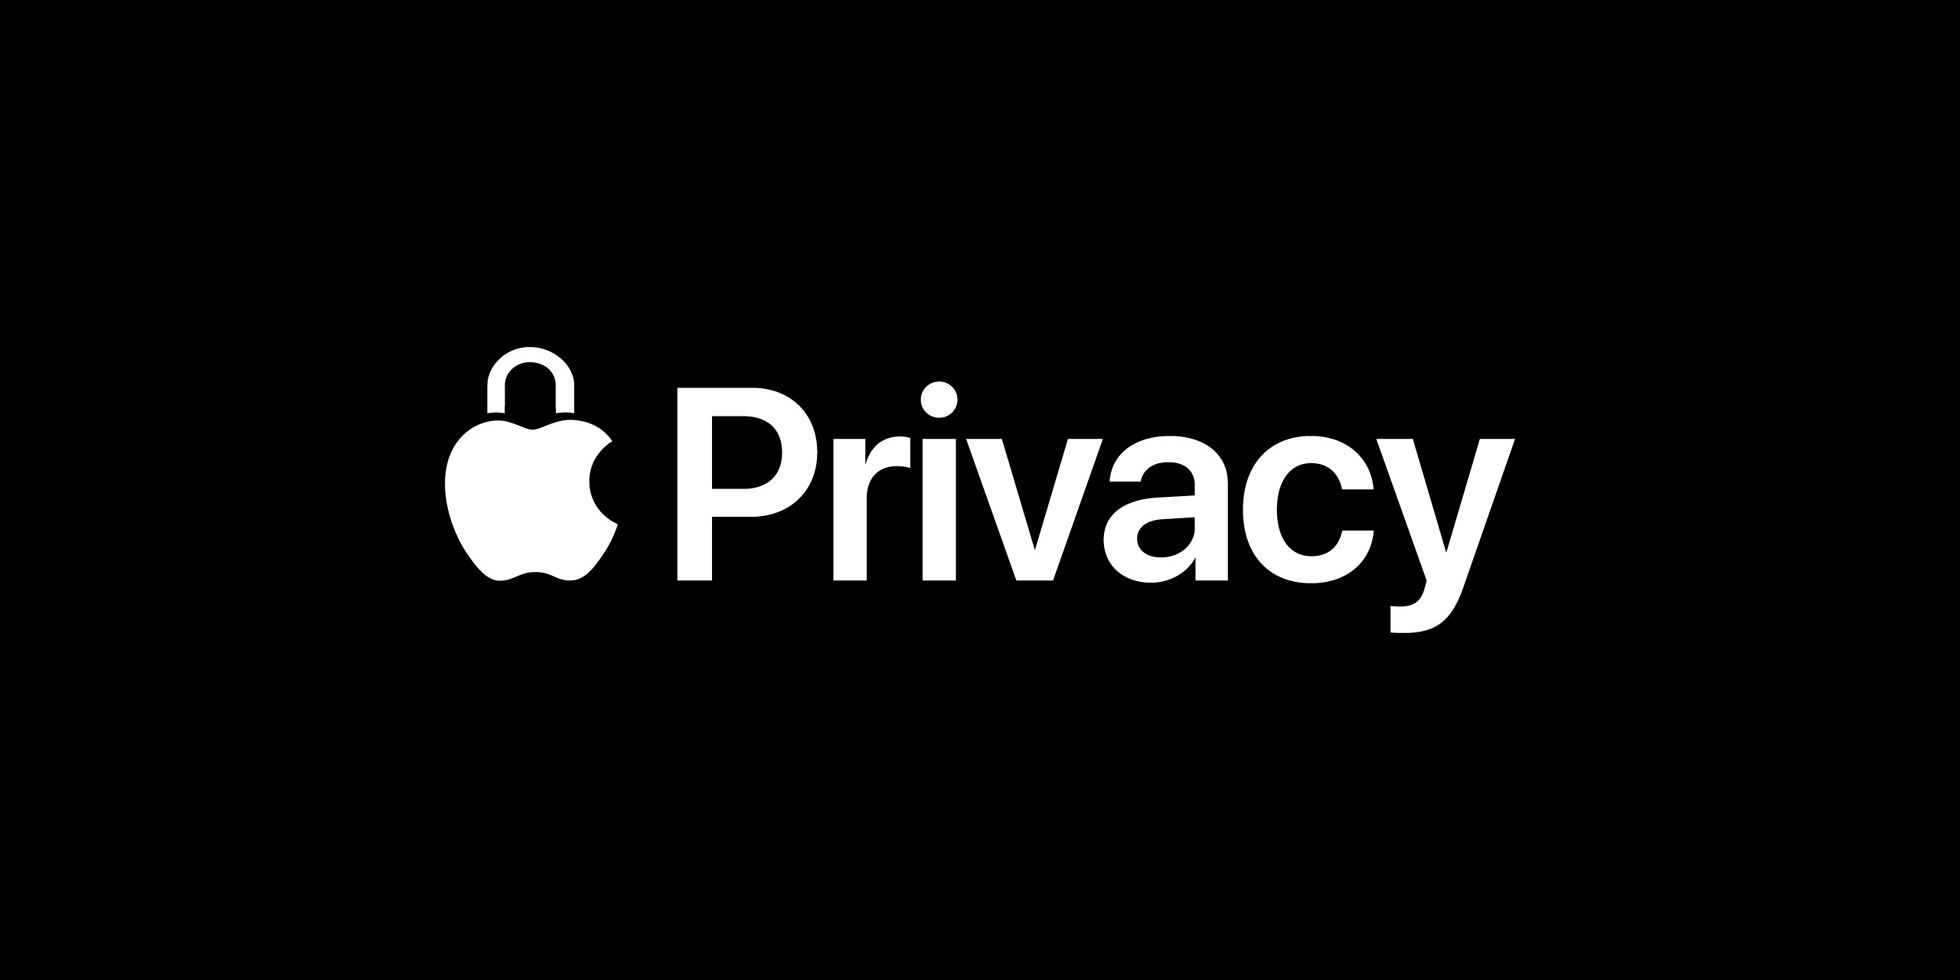 apple privacy day privacy logo 01282021 big.jpg.large